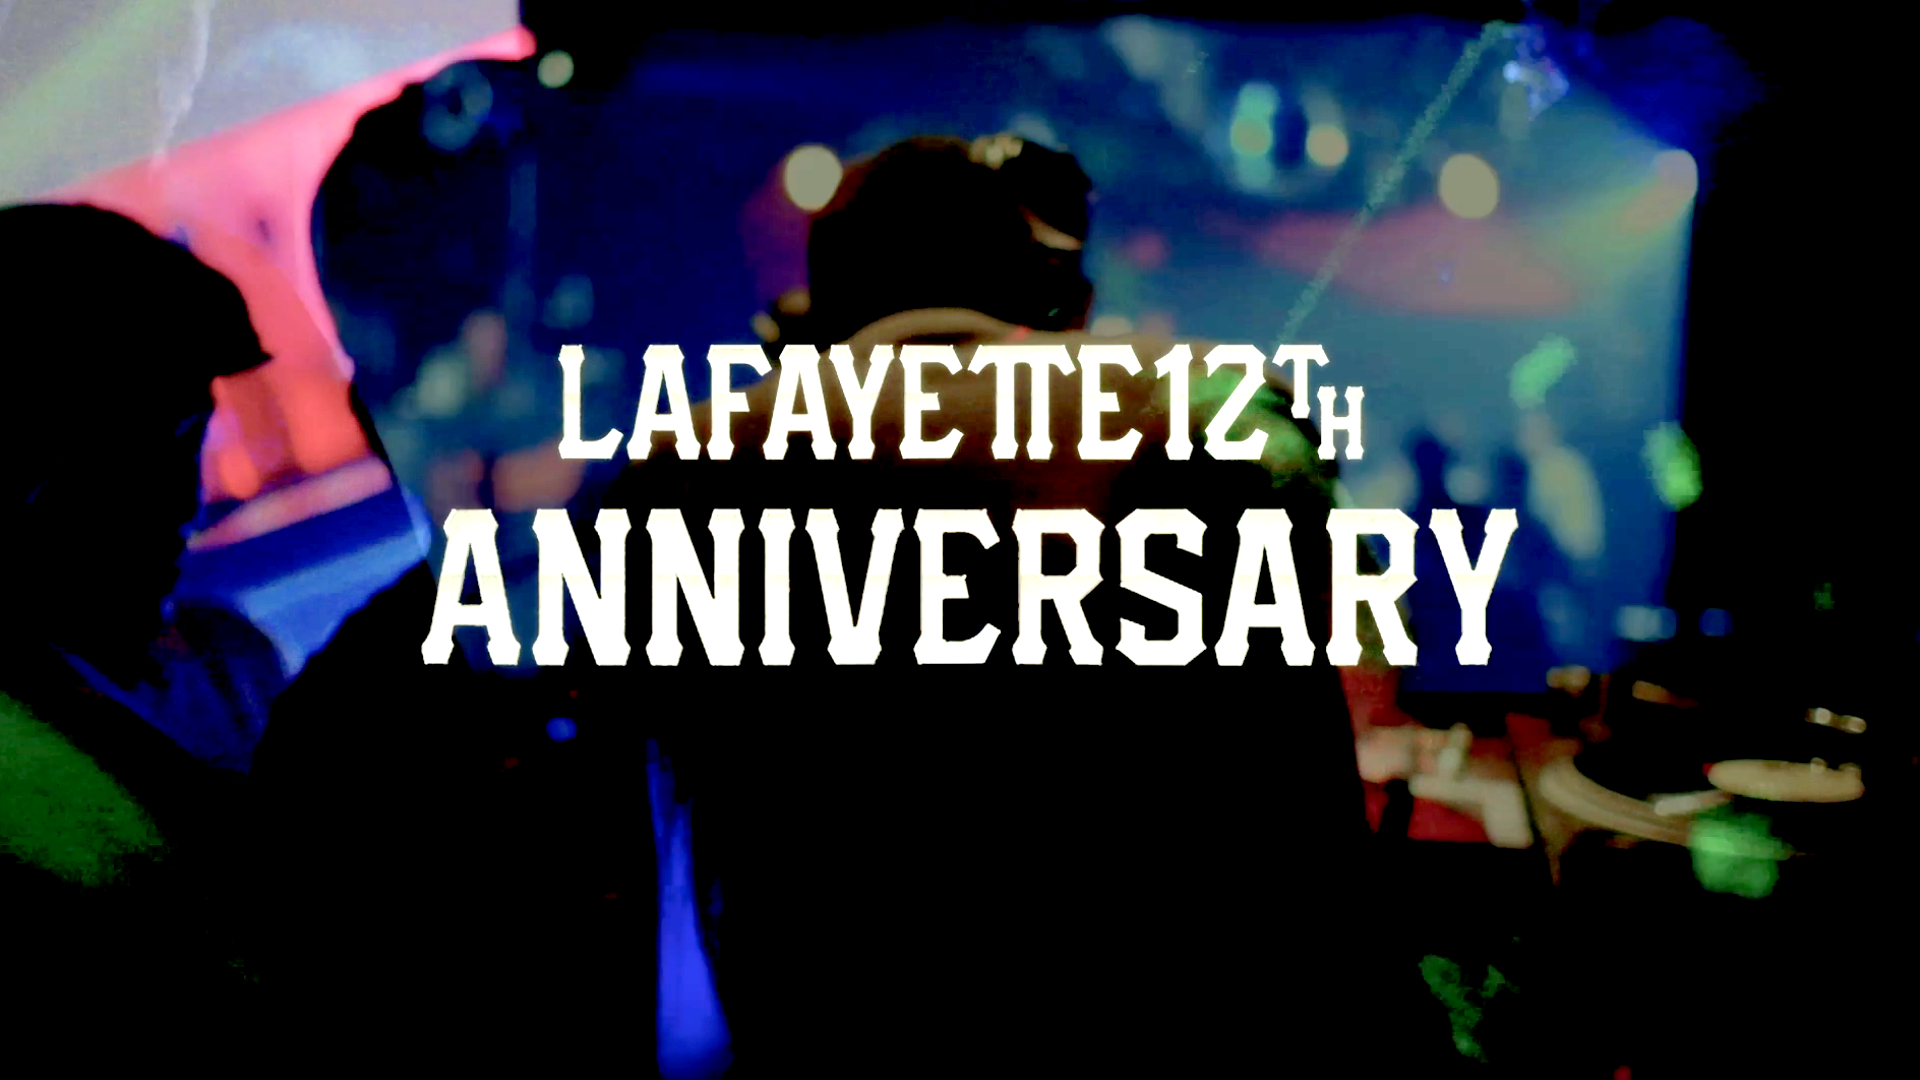 Lafayette 12th ANNIVERSARY PARTY recap MOVIE